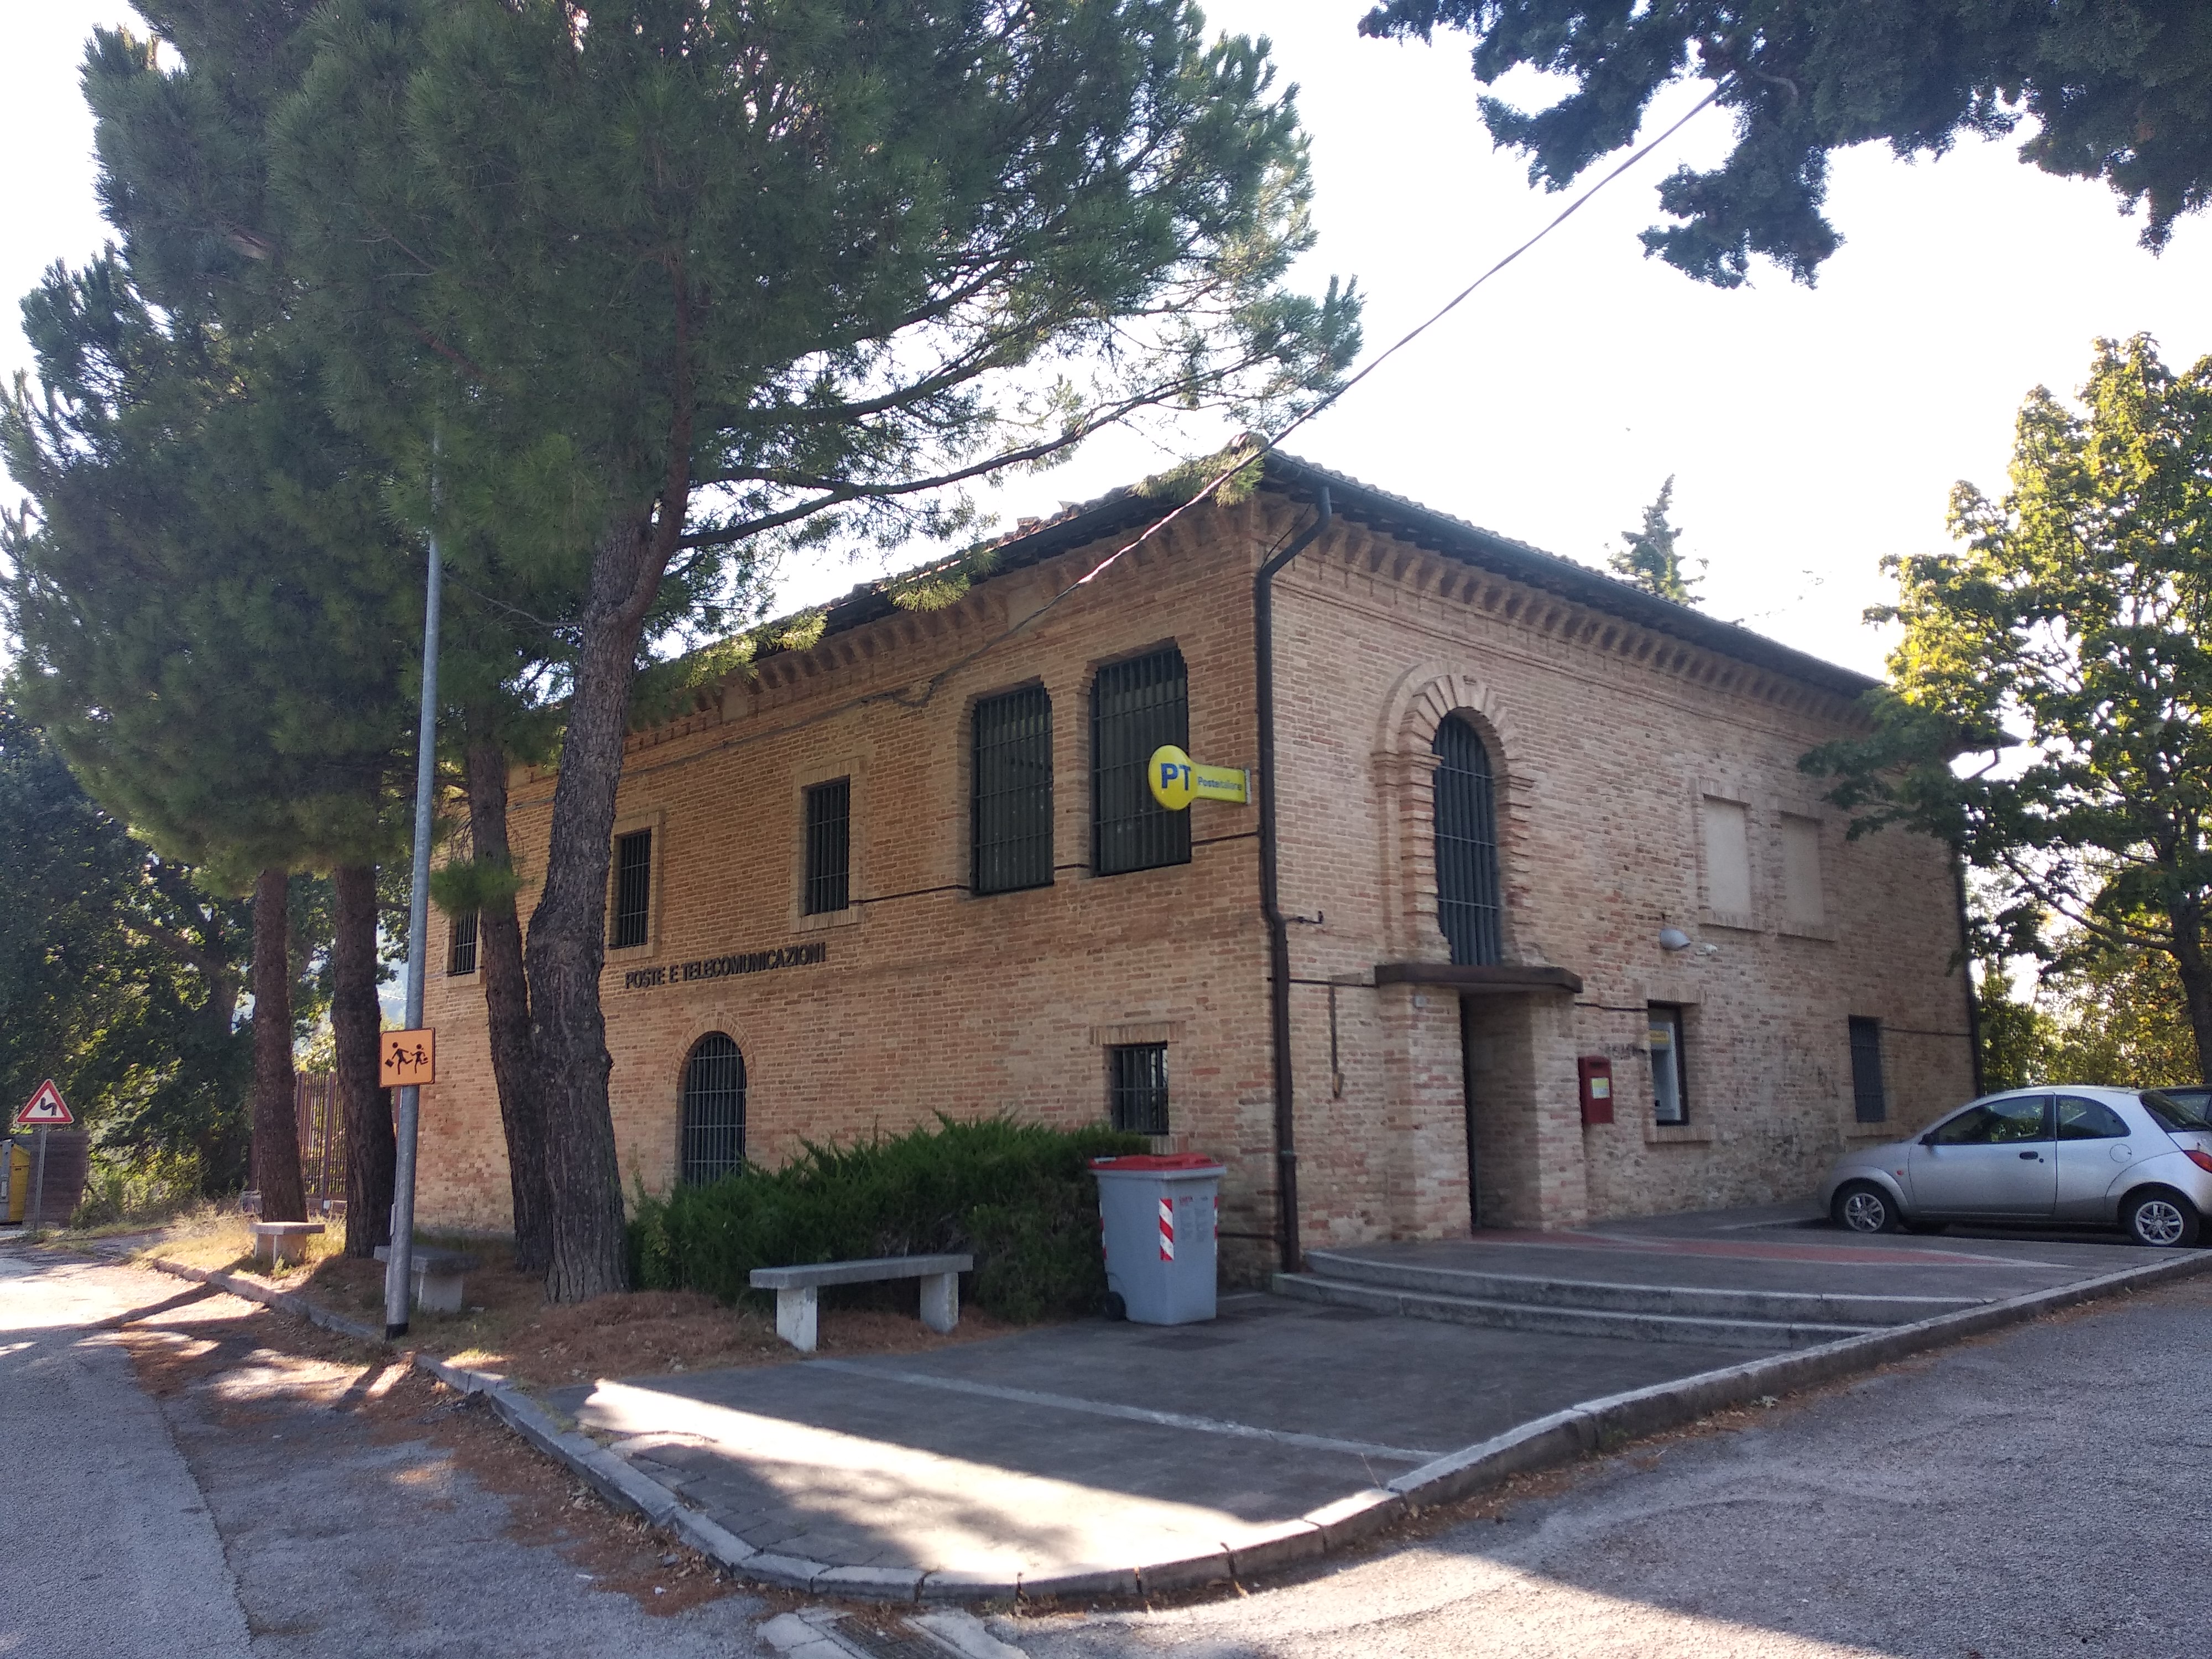 ufficio postale - Vallefoglia (PU) 